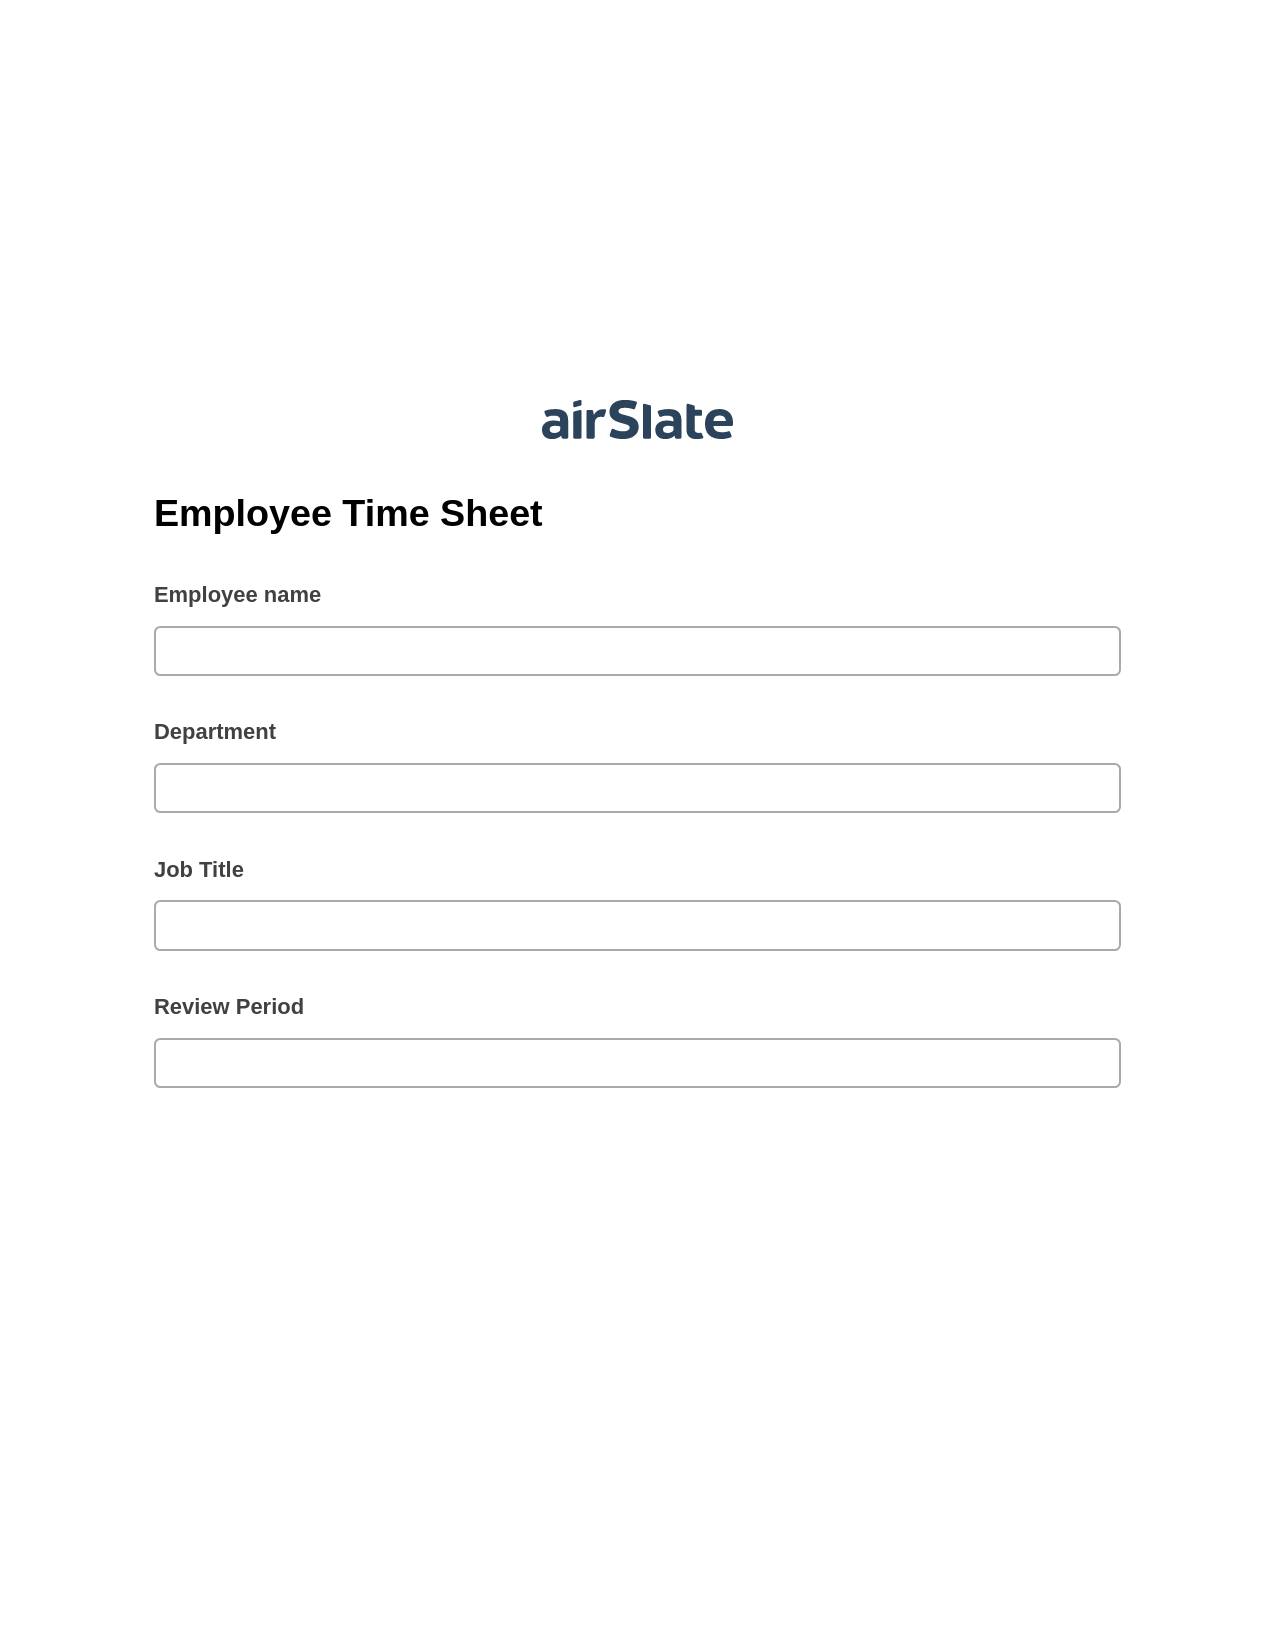 Multirole Employee Time Sheet Pre-fill from CSV File Bot, Update NetSuite Record Bot, Slack Notification Postfinish Bot